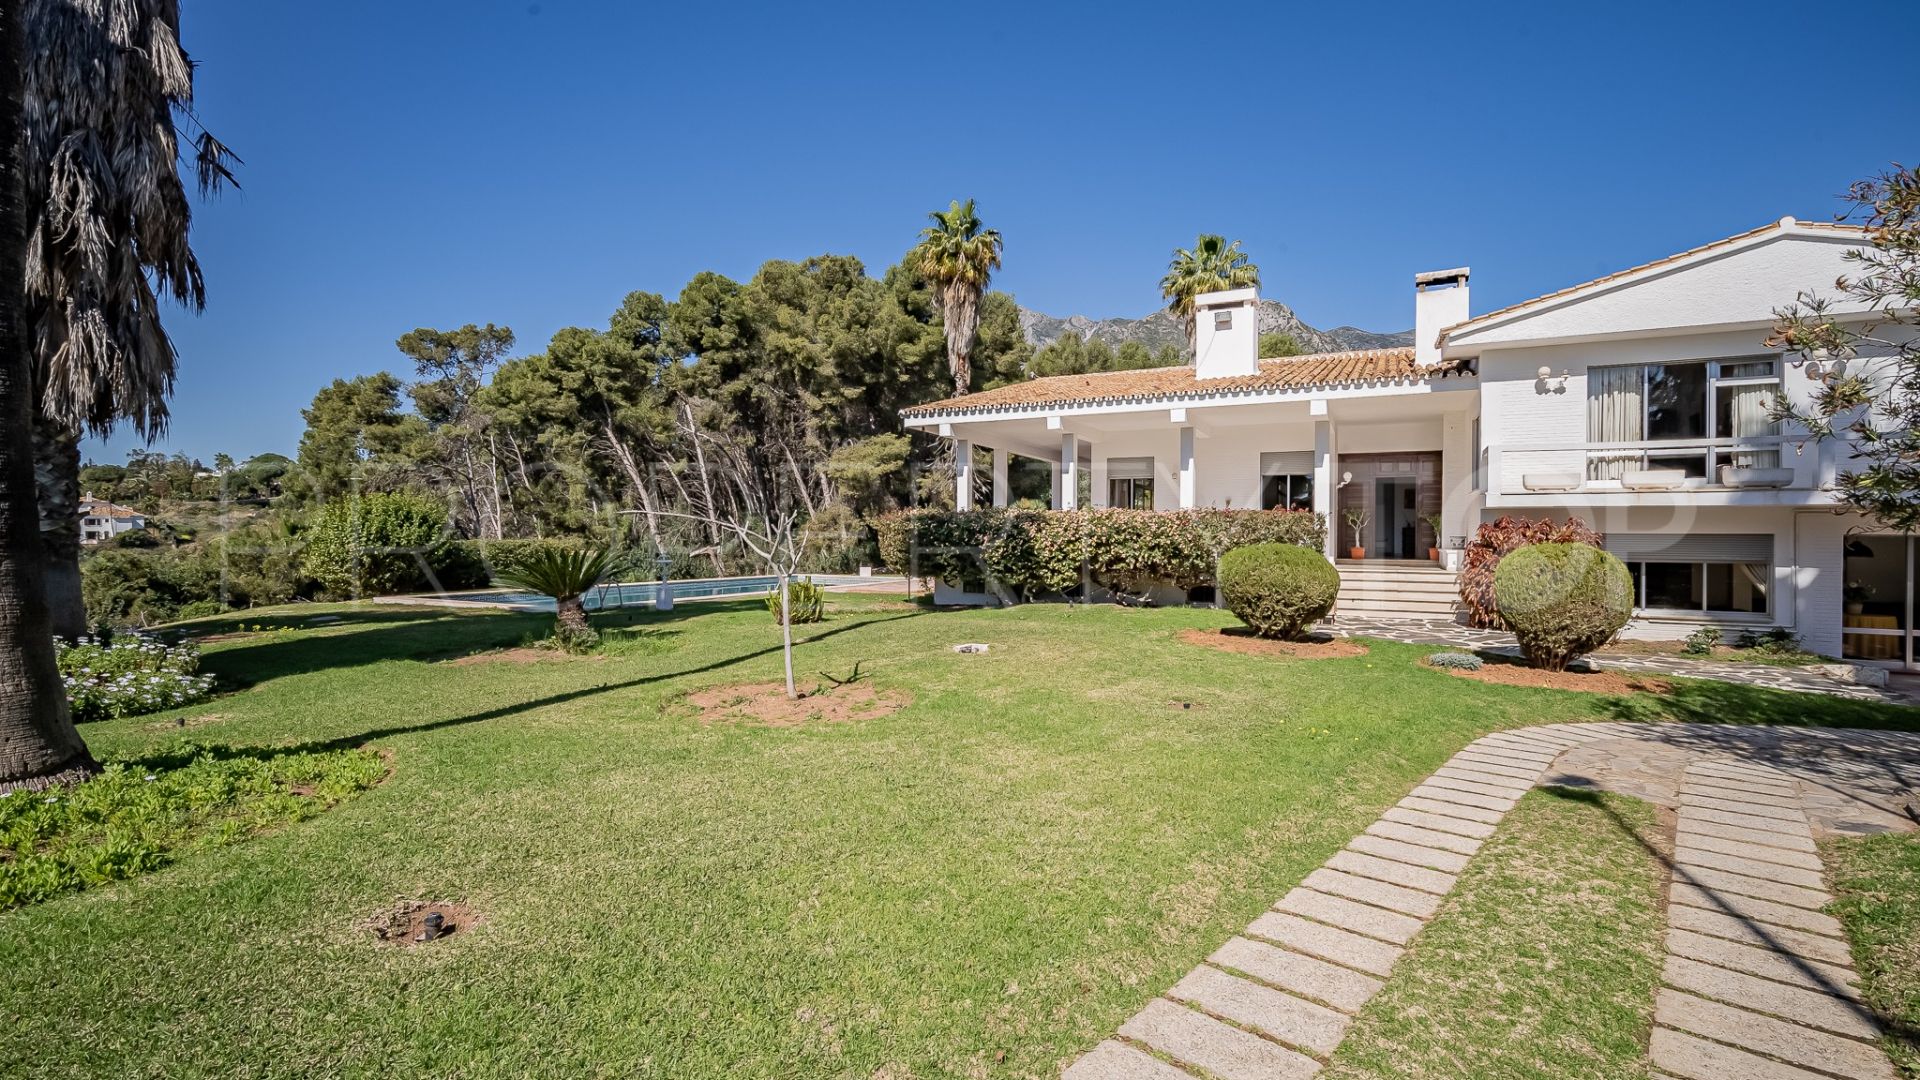 Marbella Golden Mile villa for sale